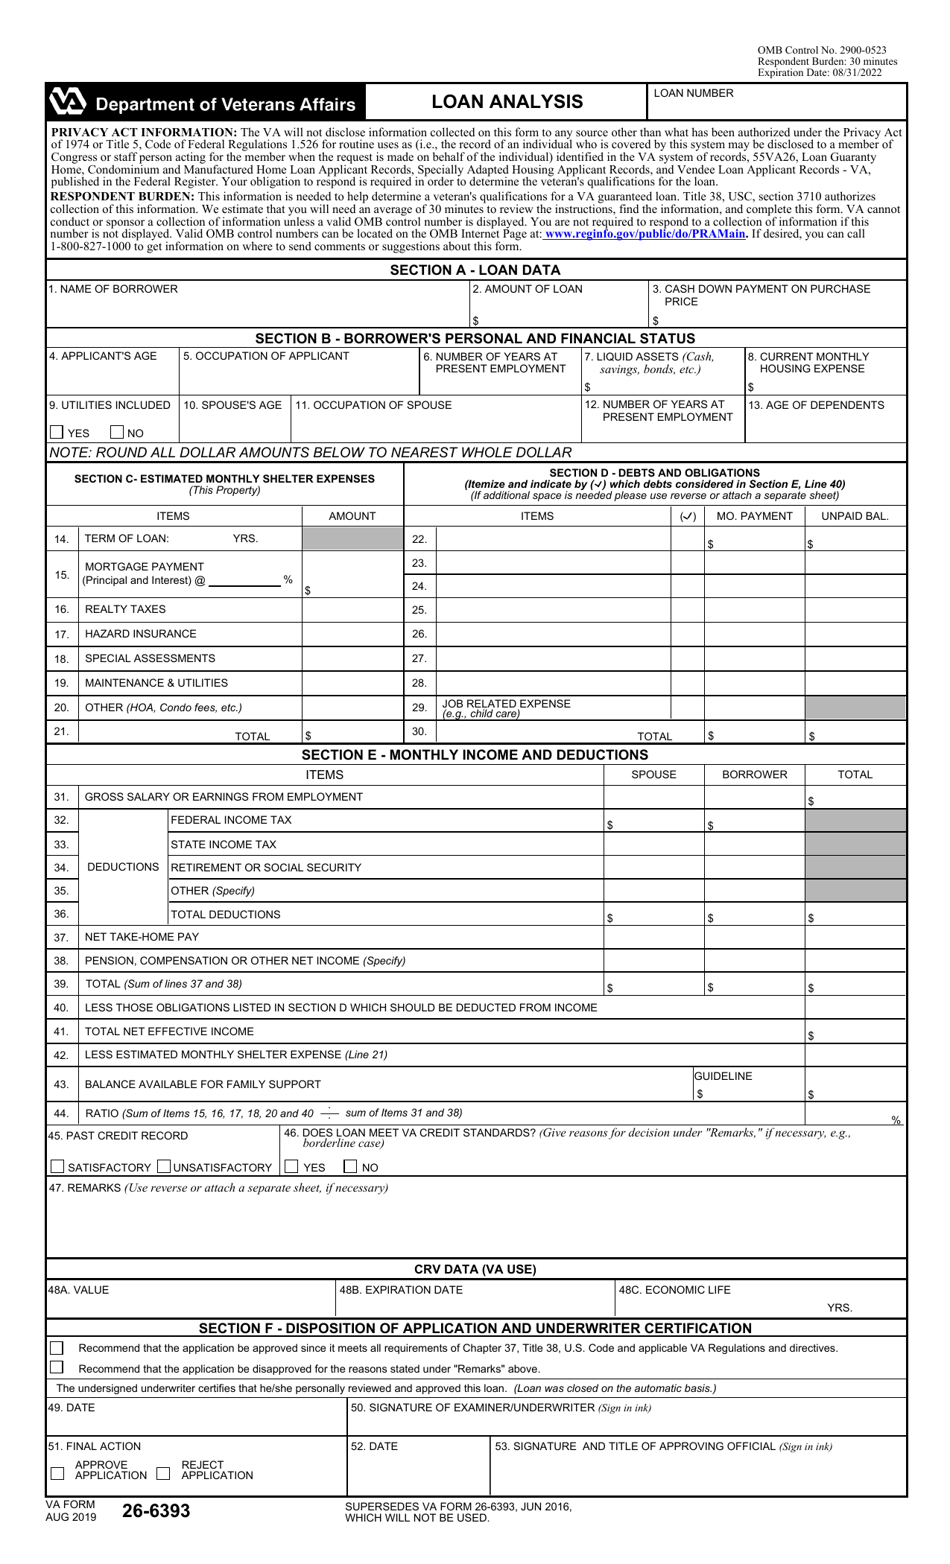 VA Form 26-6393 Loan Analysis, Page 1